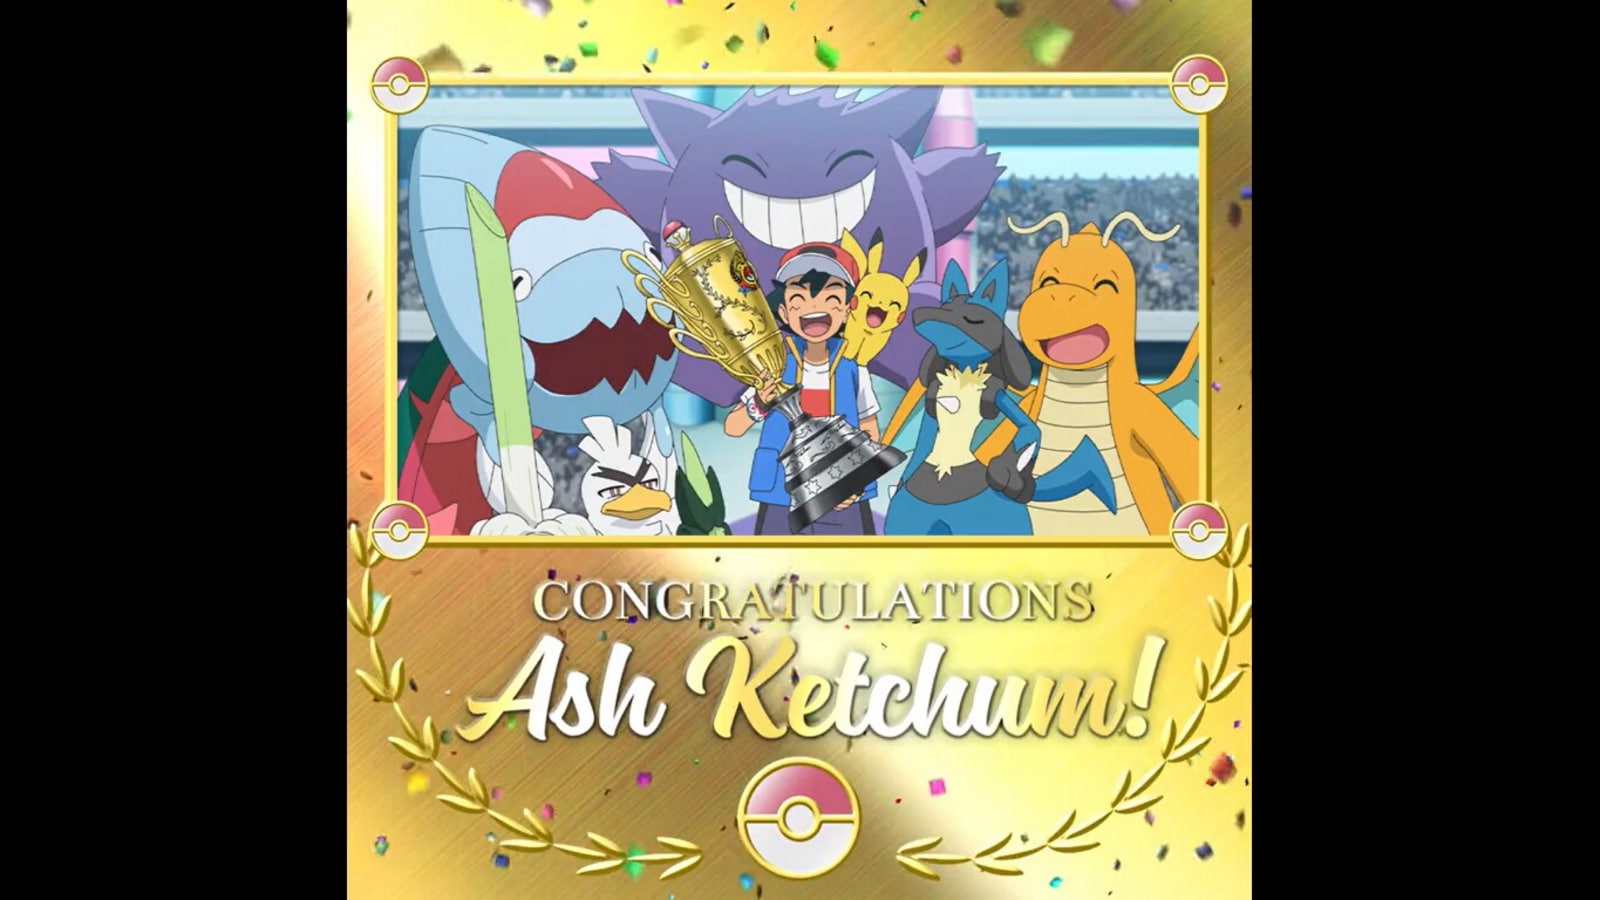 Ash Ketchum becomes Pokémon world champion after 25year journey